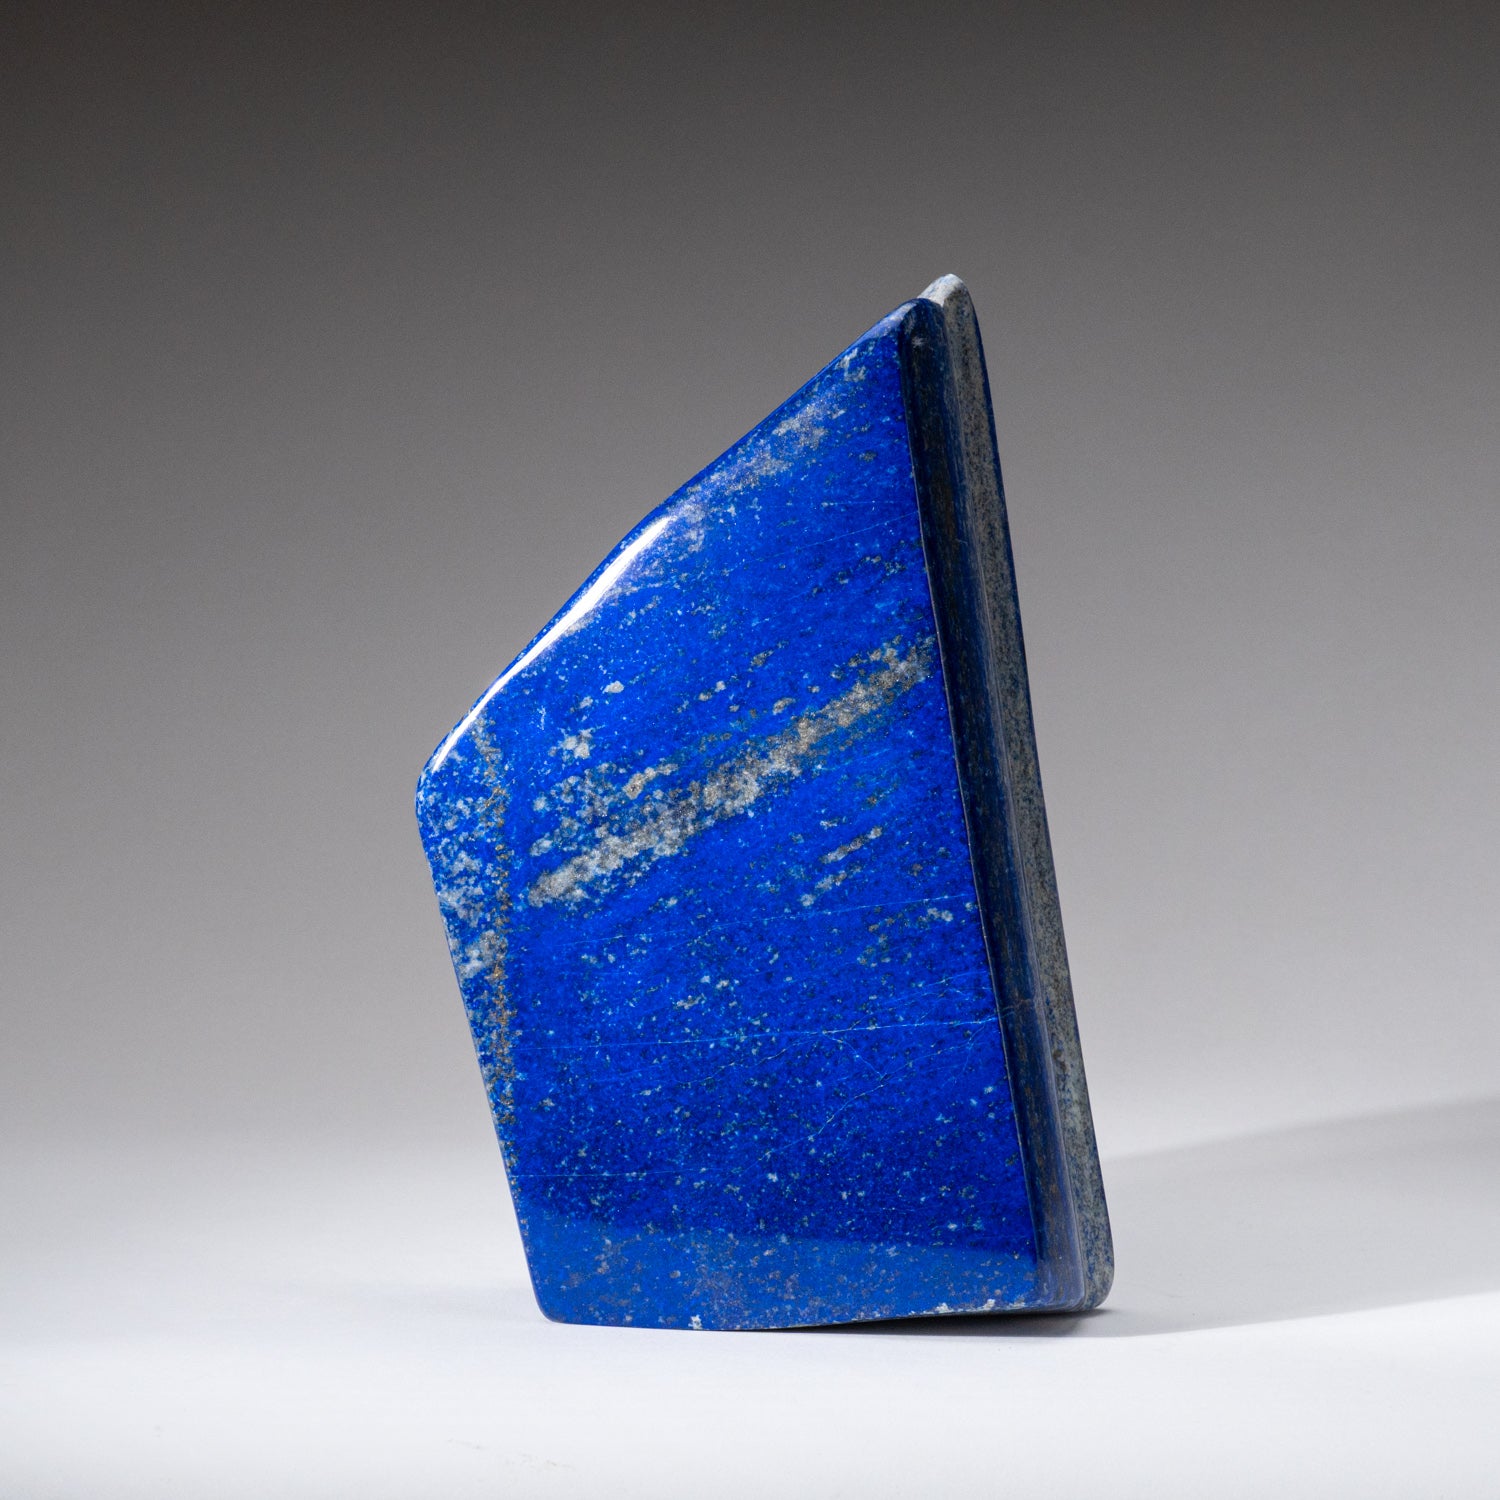 Polished Lapis Lazuli Freeform from Afghanistan (6.3 lbs)